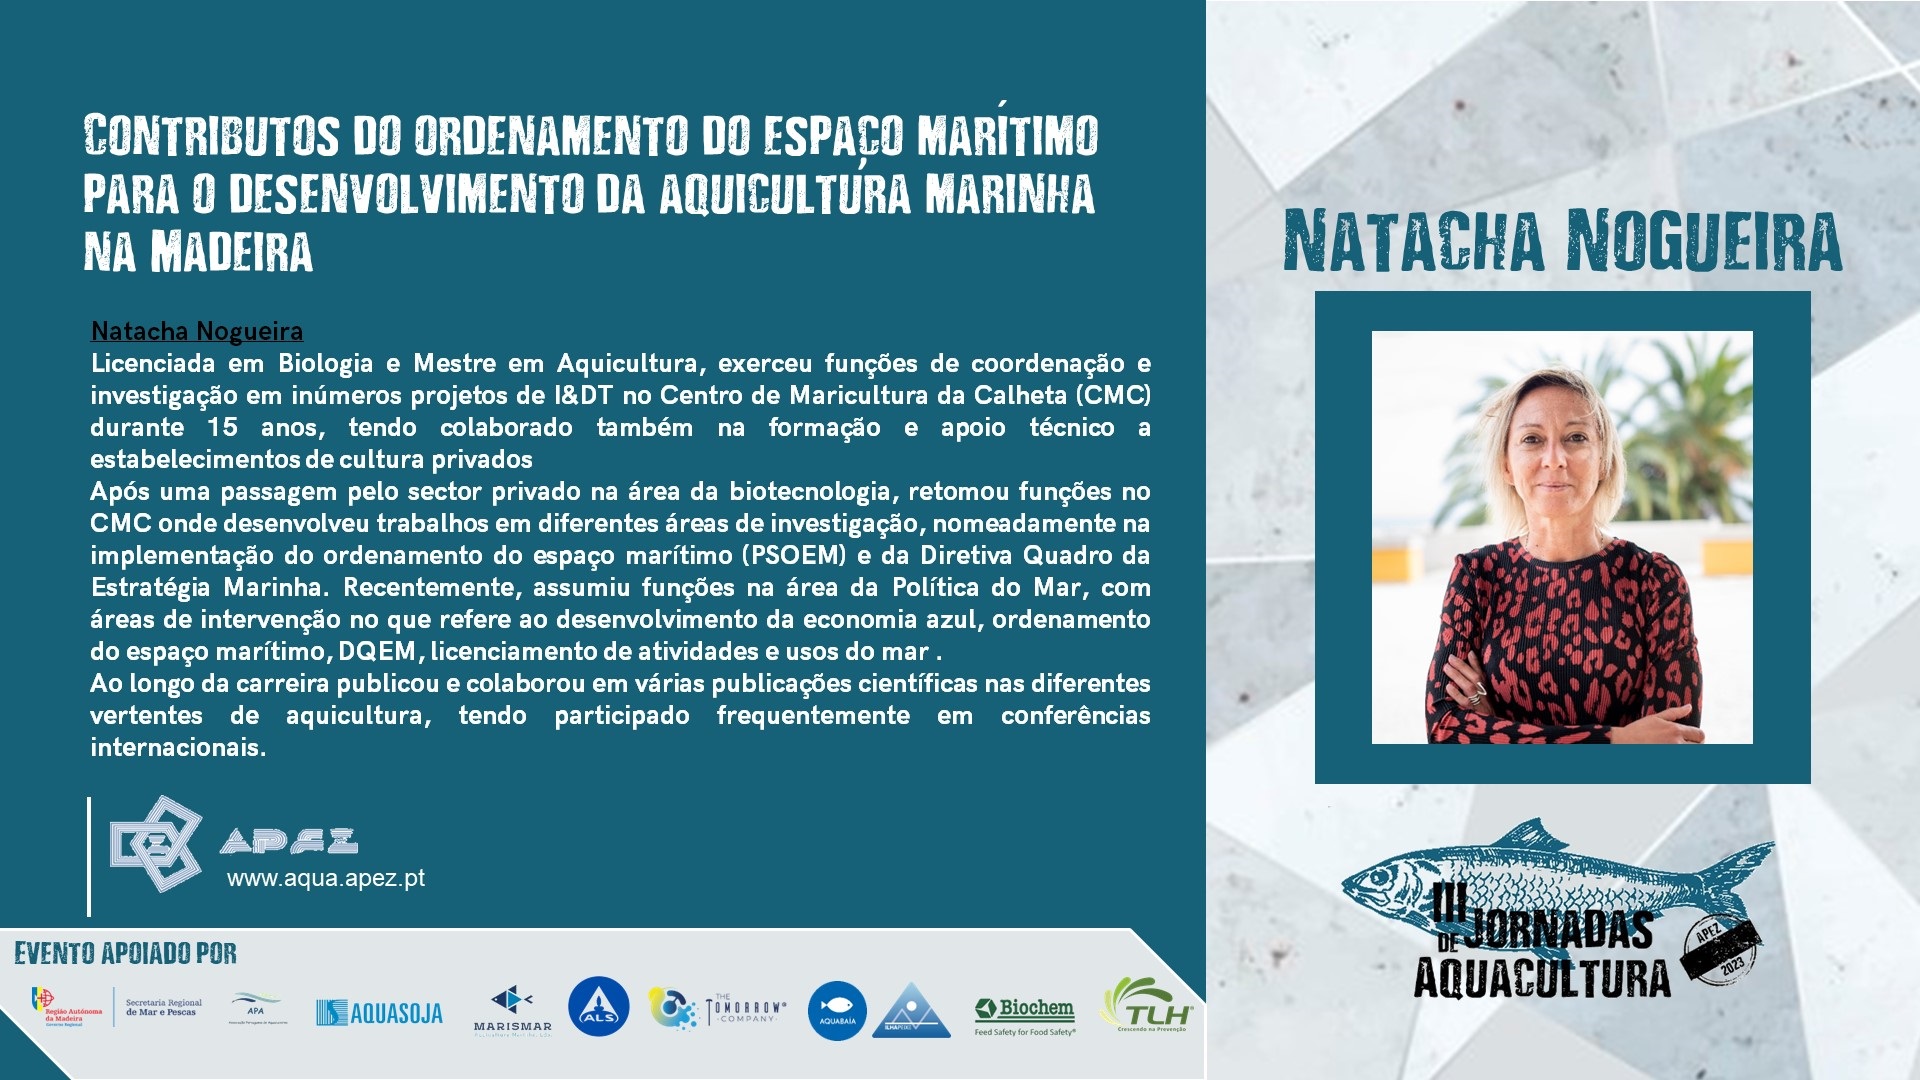 Natacha Nogueira